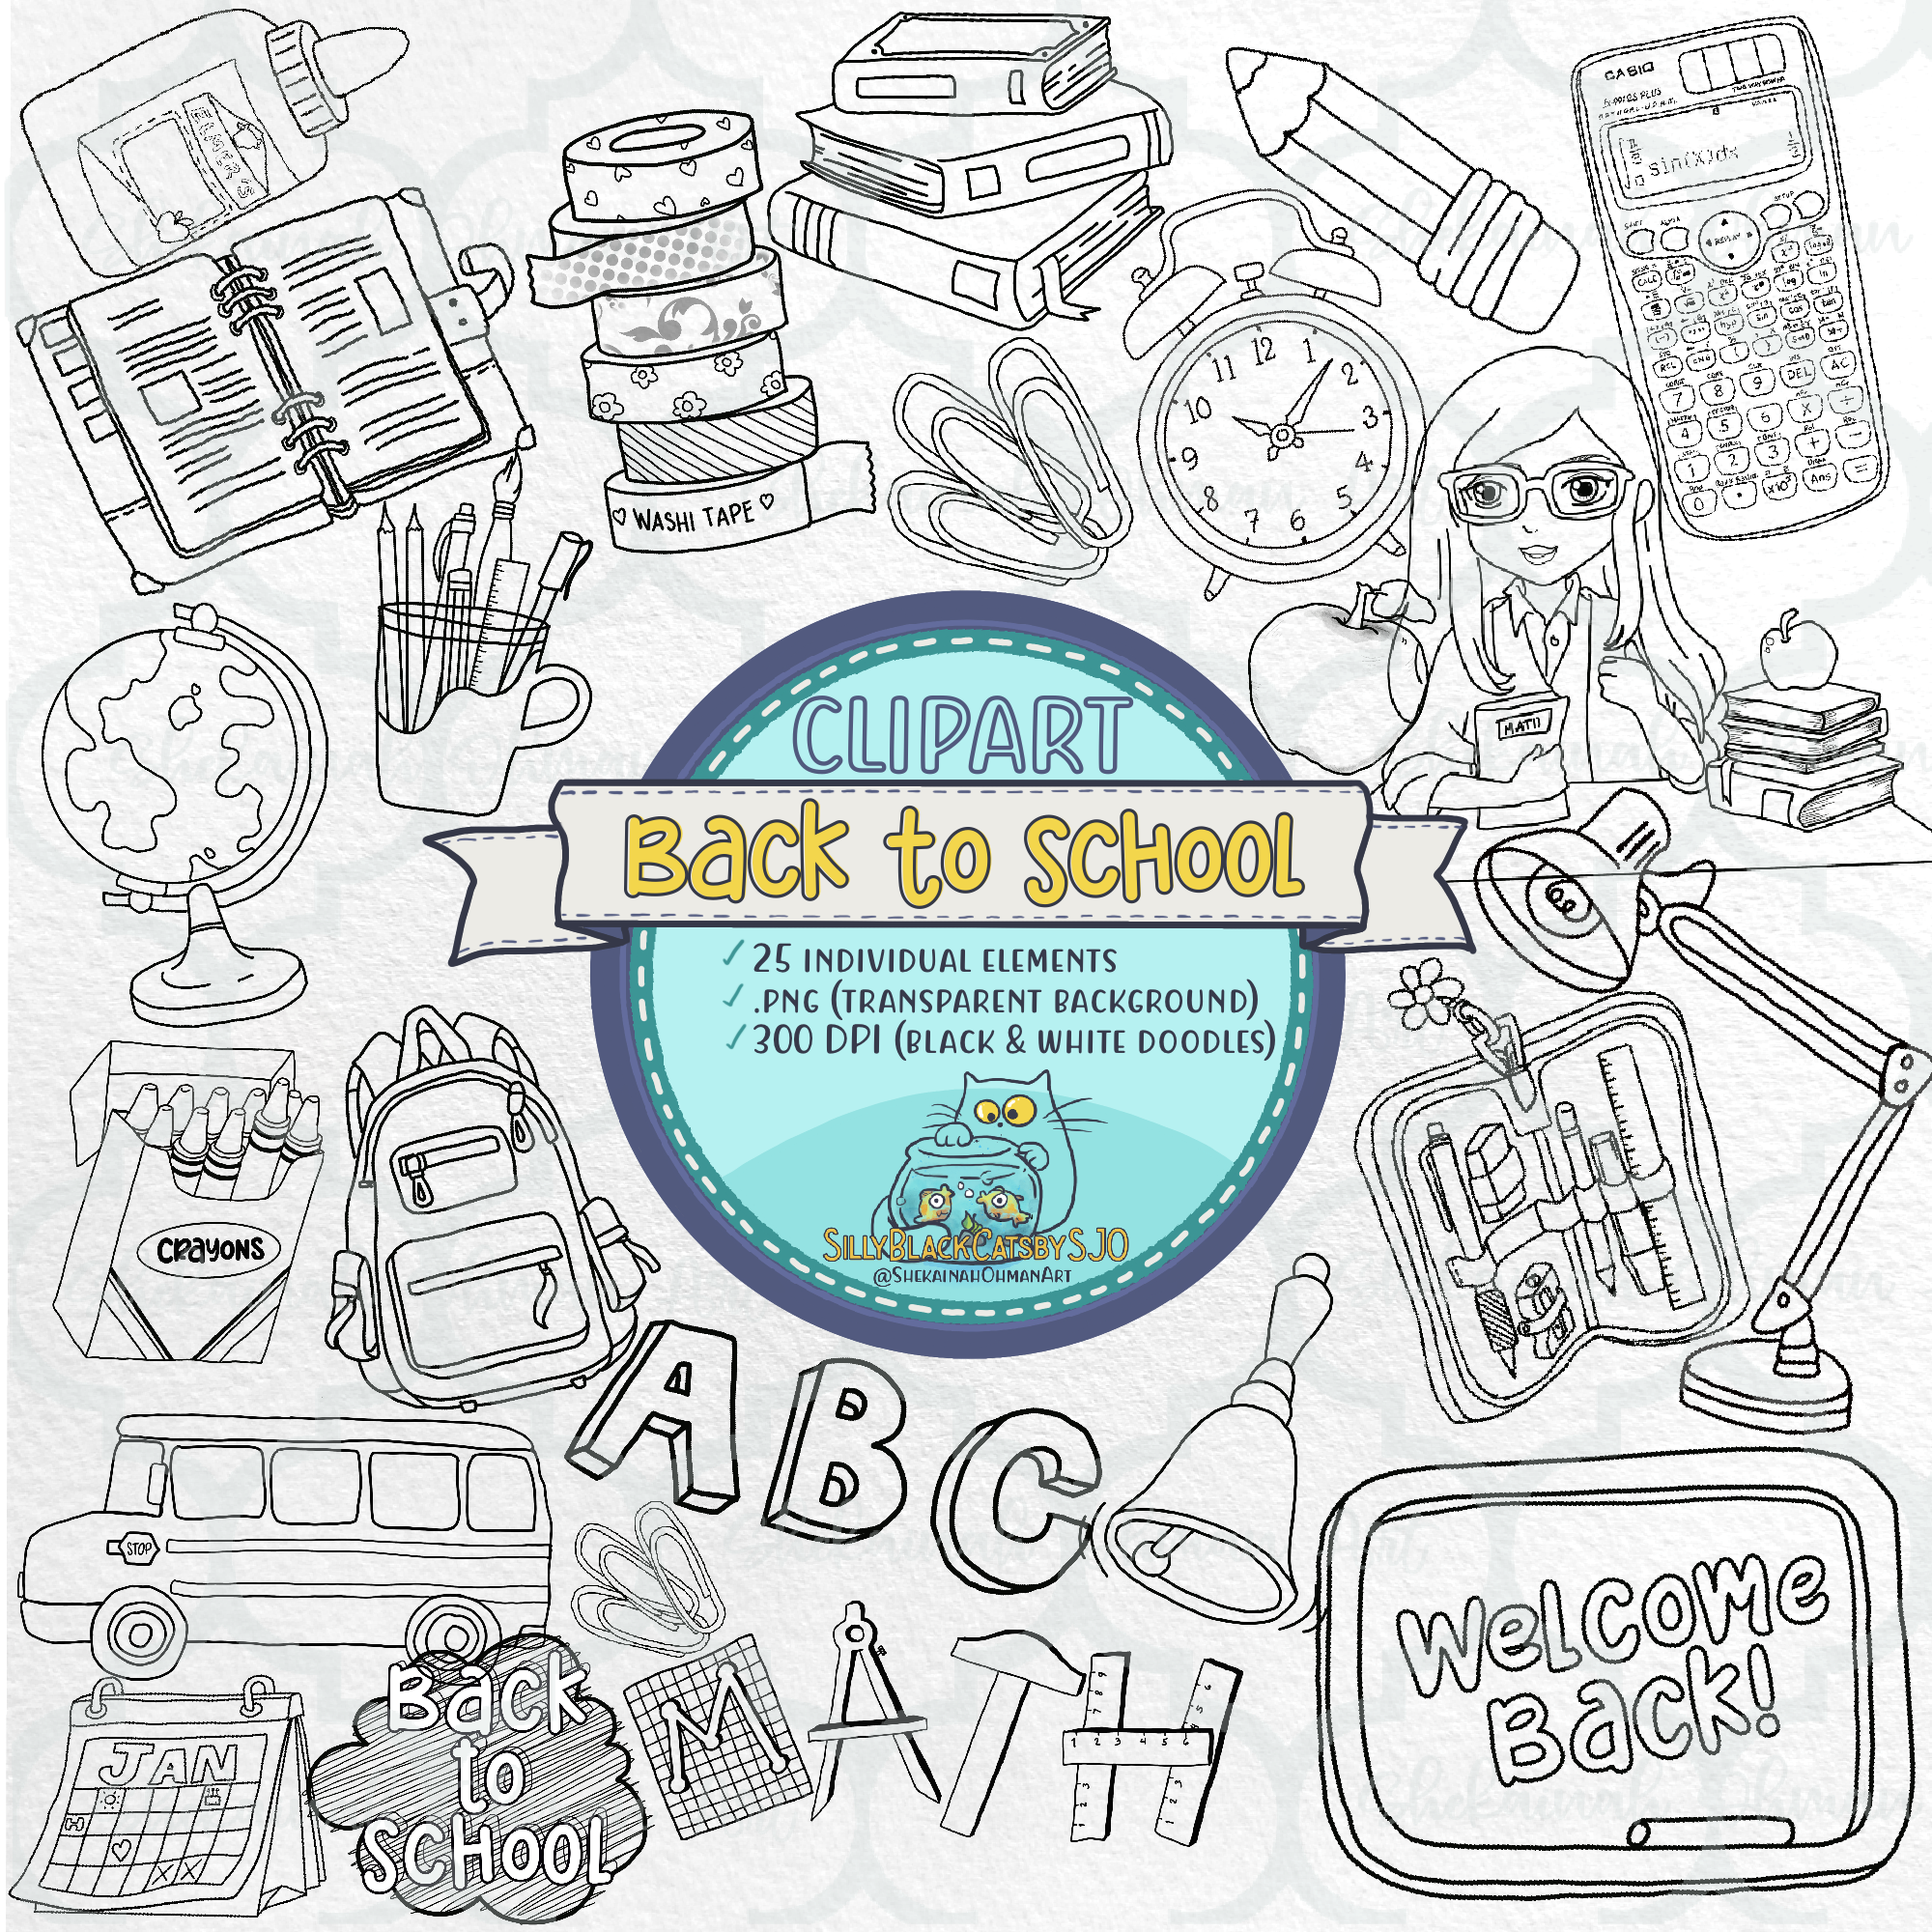 BW-Back to school clipart bundle(BLACK&WHITE) | School cliparts, stationary, png, bag, globe, calculator, clock, pen, books, bus